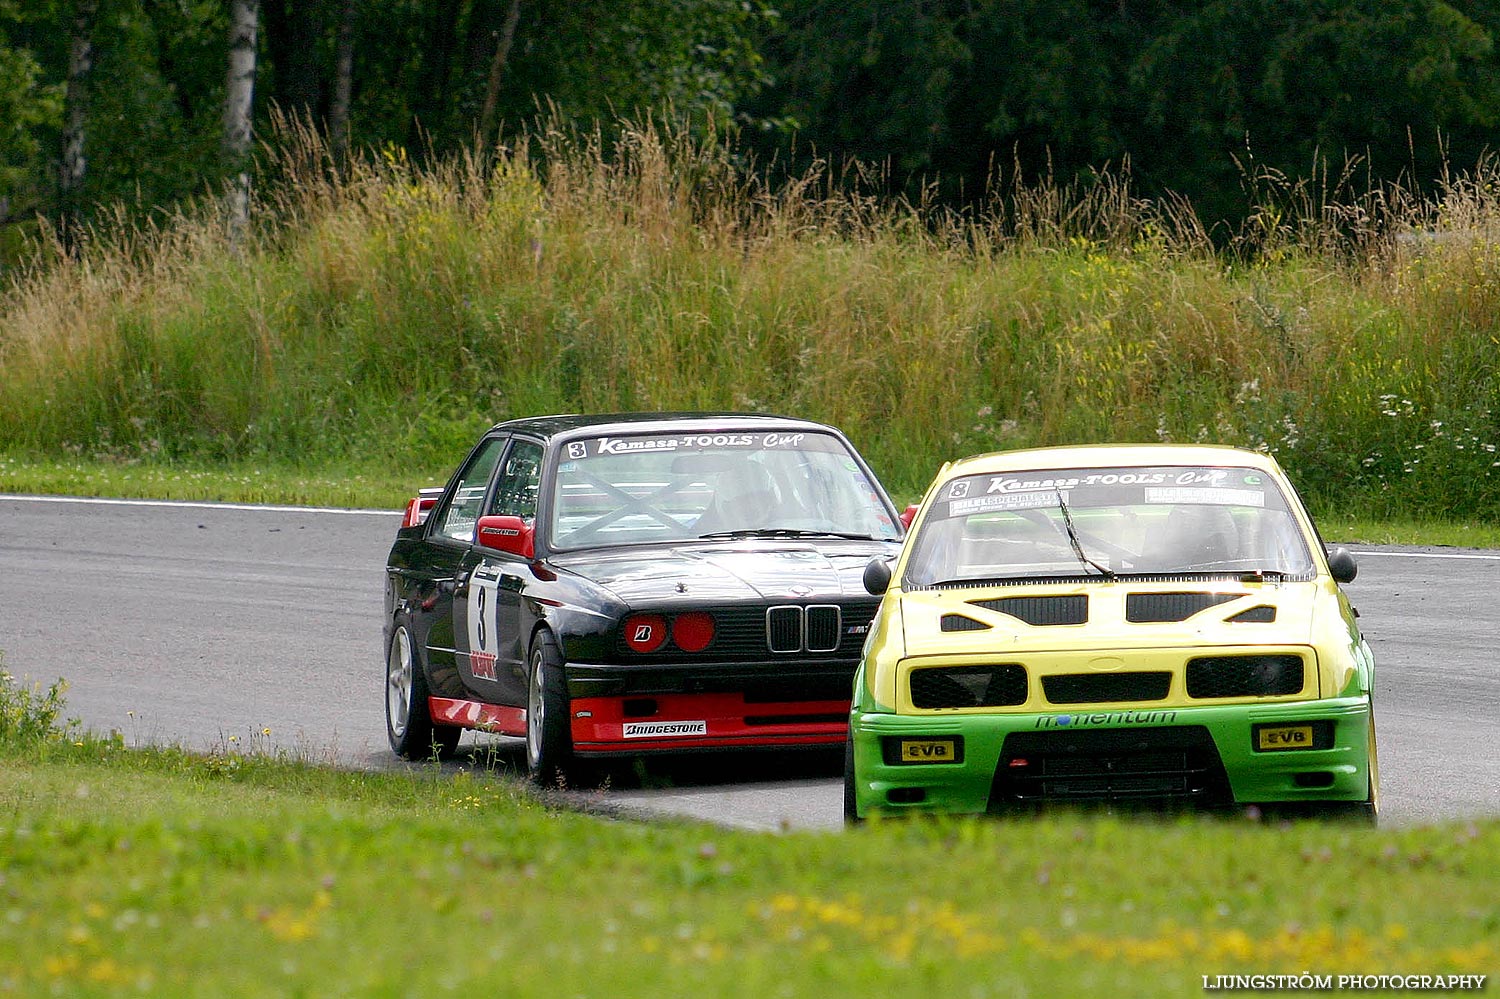 SSK Raceweek,mix,Kinnekulle Ring,Götene,Sverige,Motorsport,,2004,92433